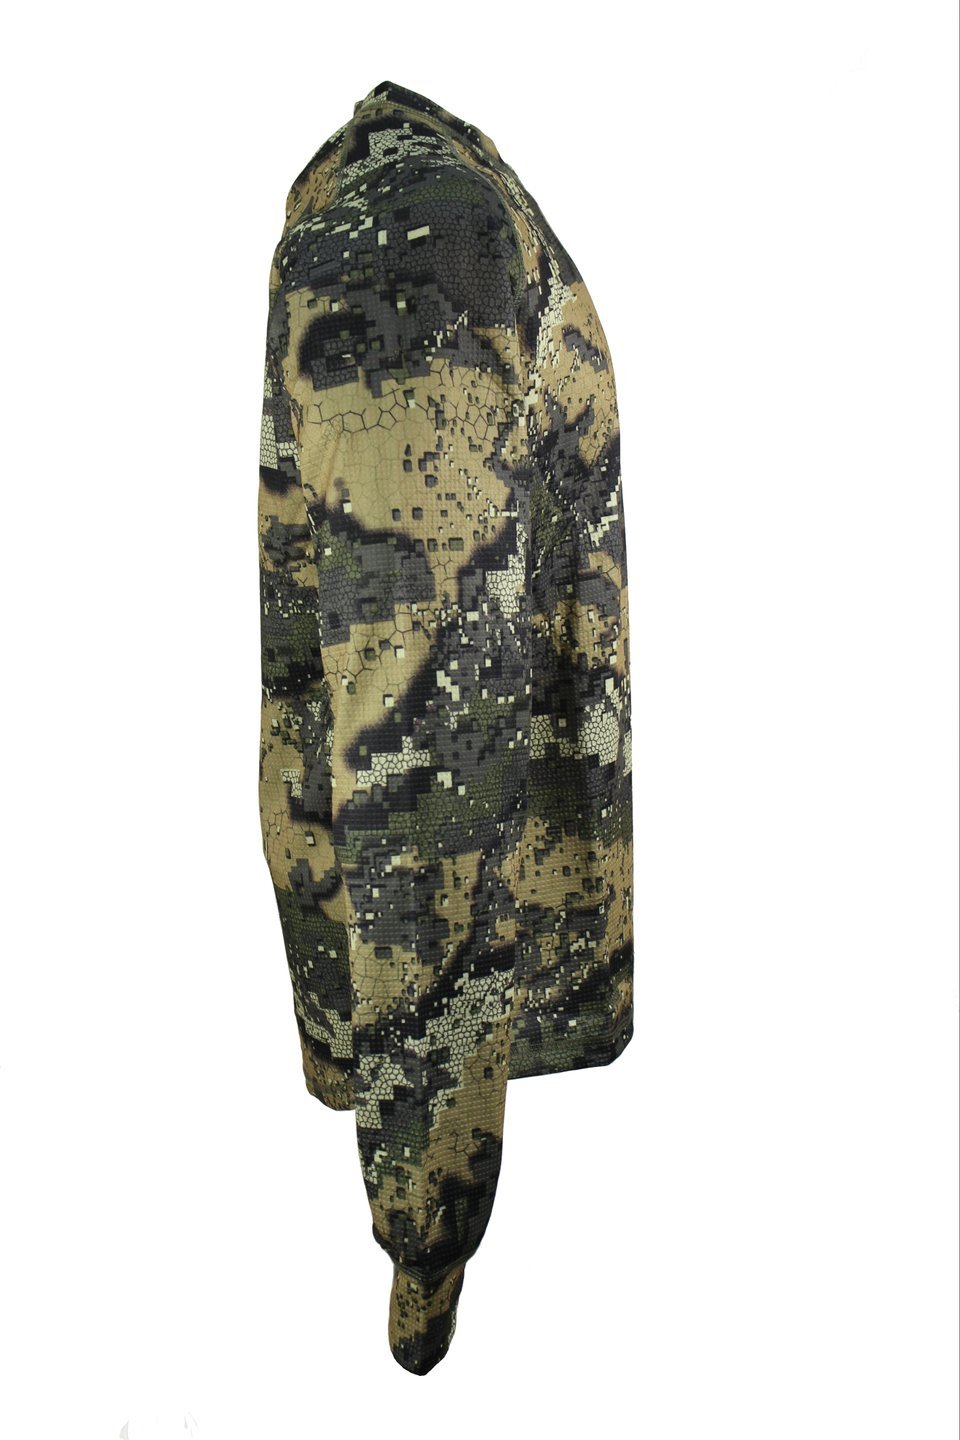 Джемпер охотничий  Remington Men's  Camouflage T-Shirt  APG Hunting Camo, цвет Optifade, р. L (RM1305-999)